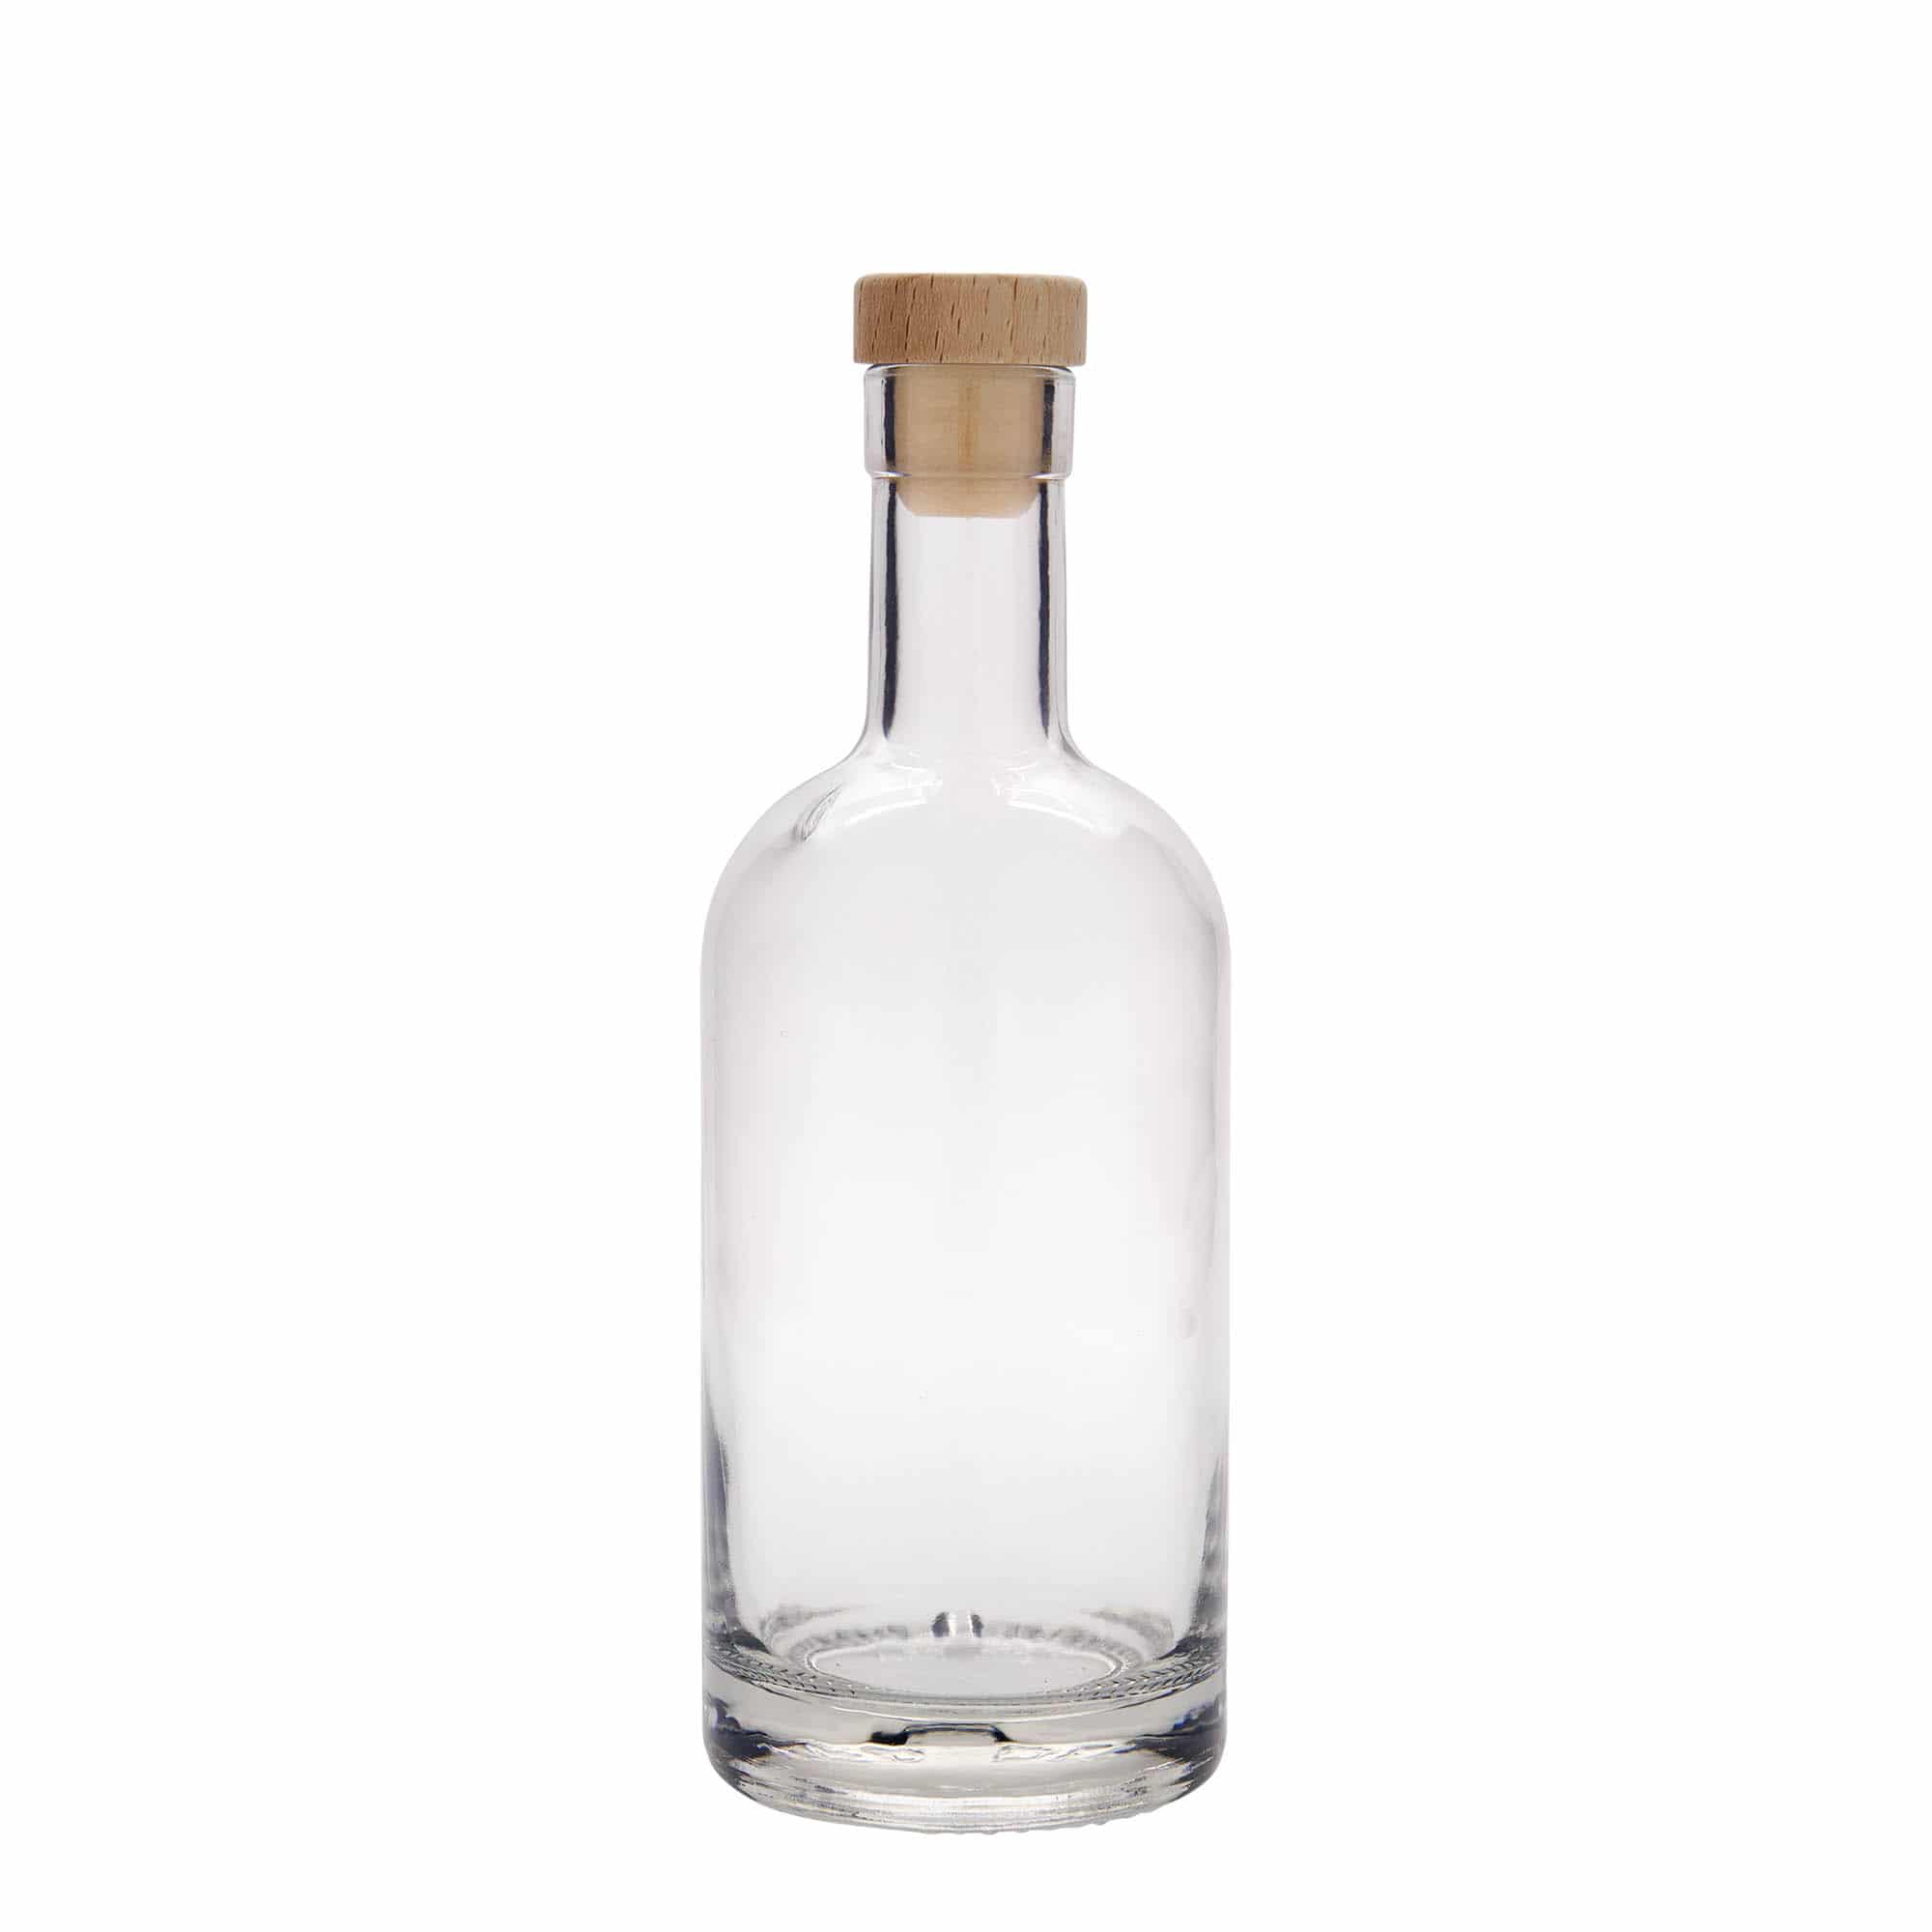 500 ml glass bottle 'Franco', closure: cork